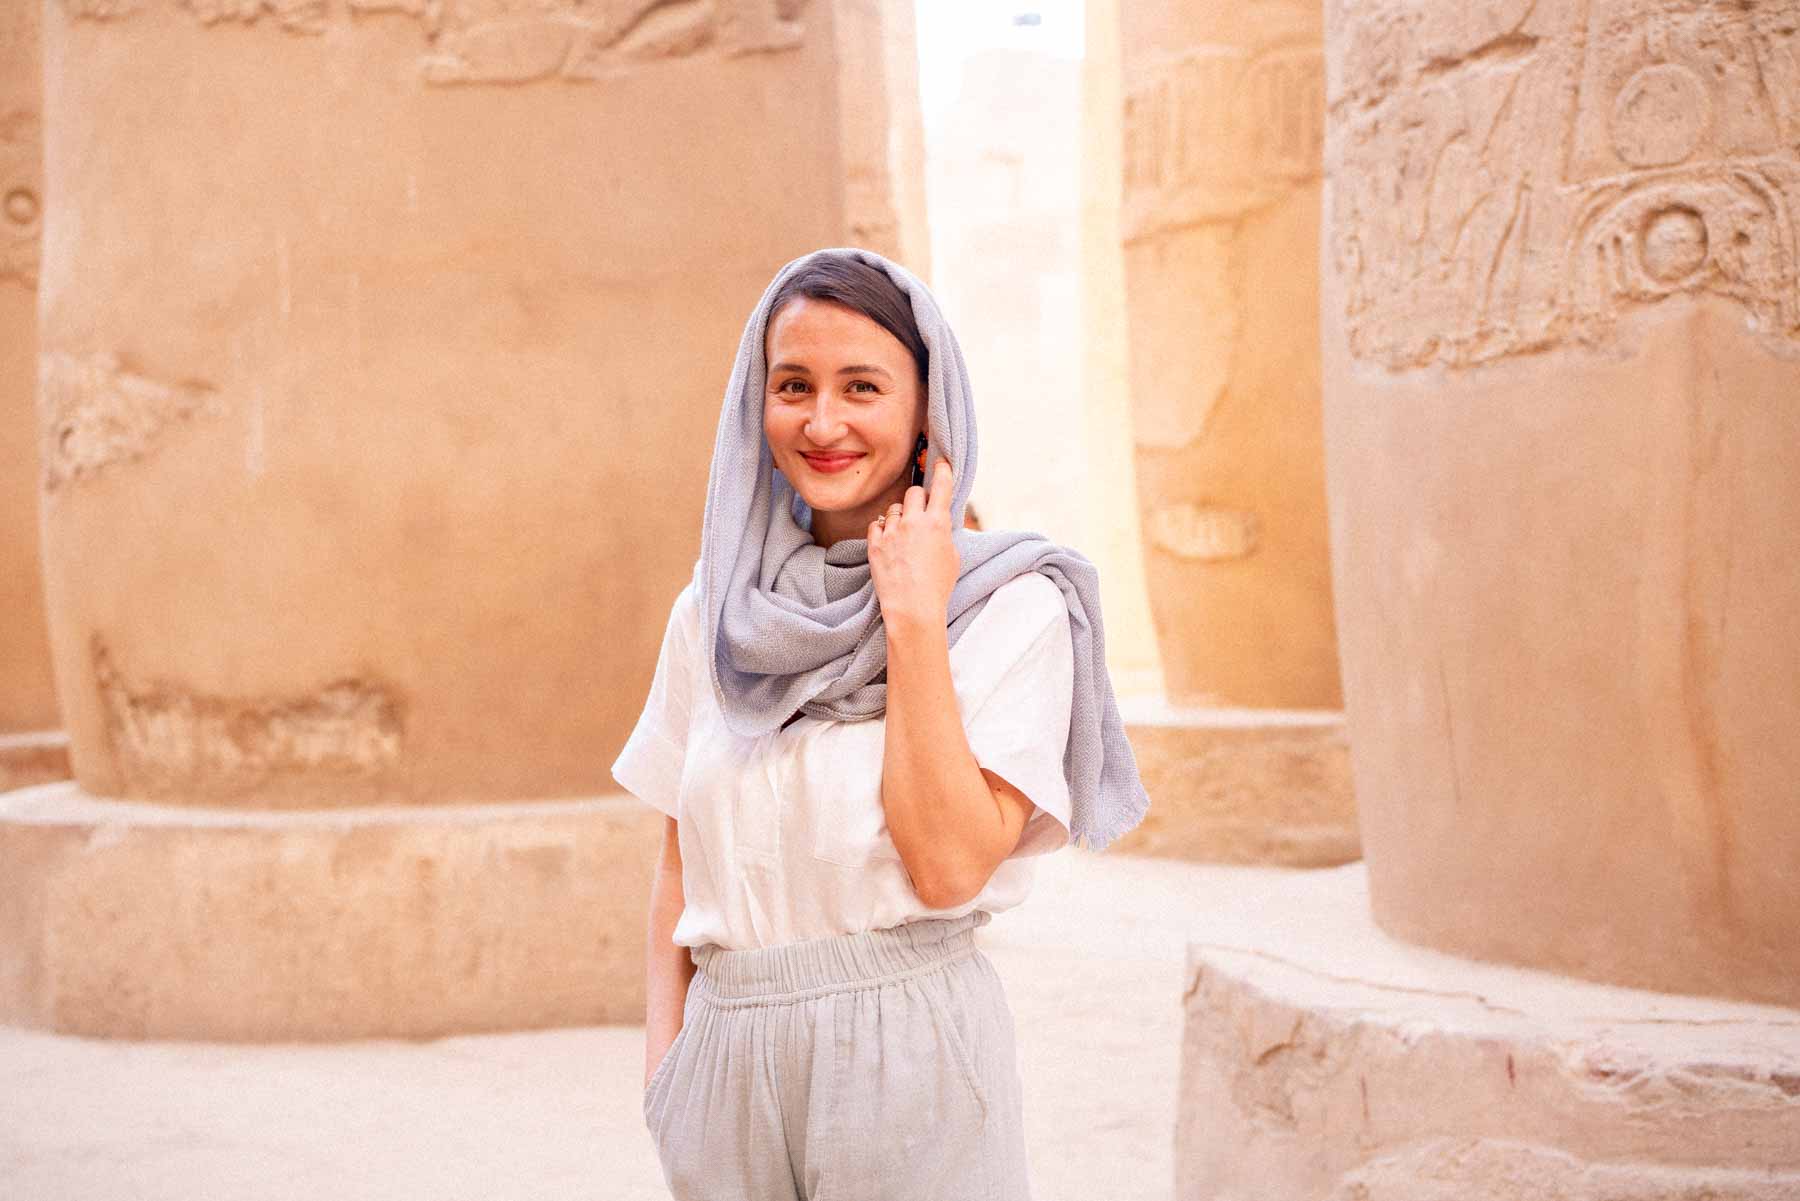 What to wear in Egypt for women
Do women need to cover hair in Egypt
Do i need to cover my hair in Egypt?